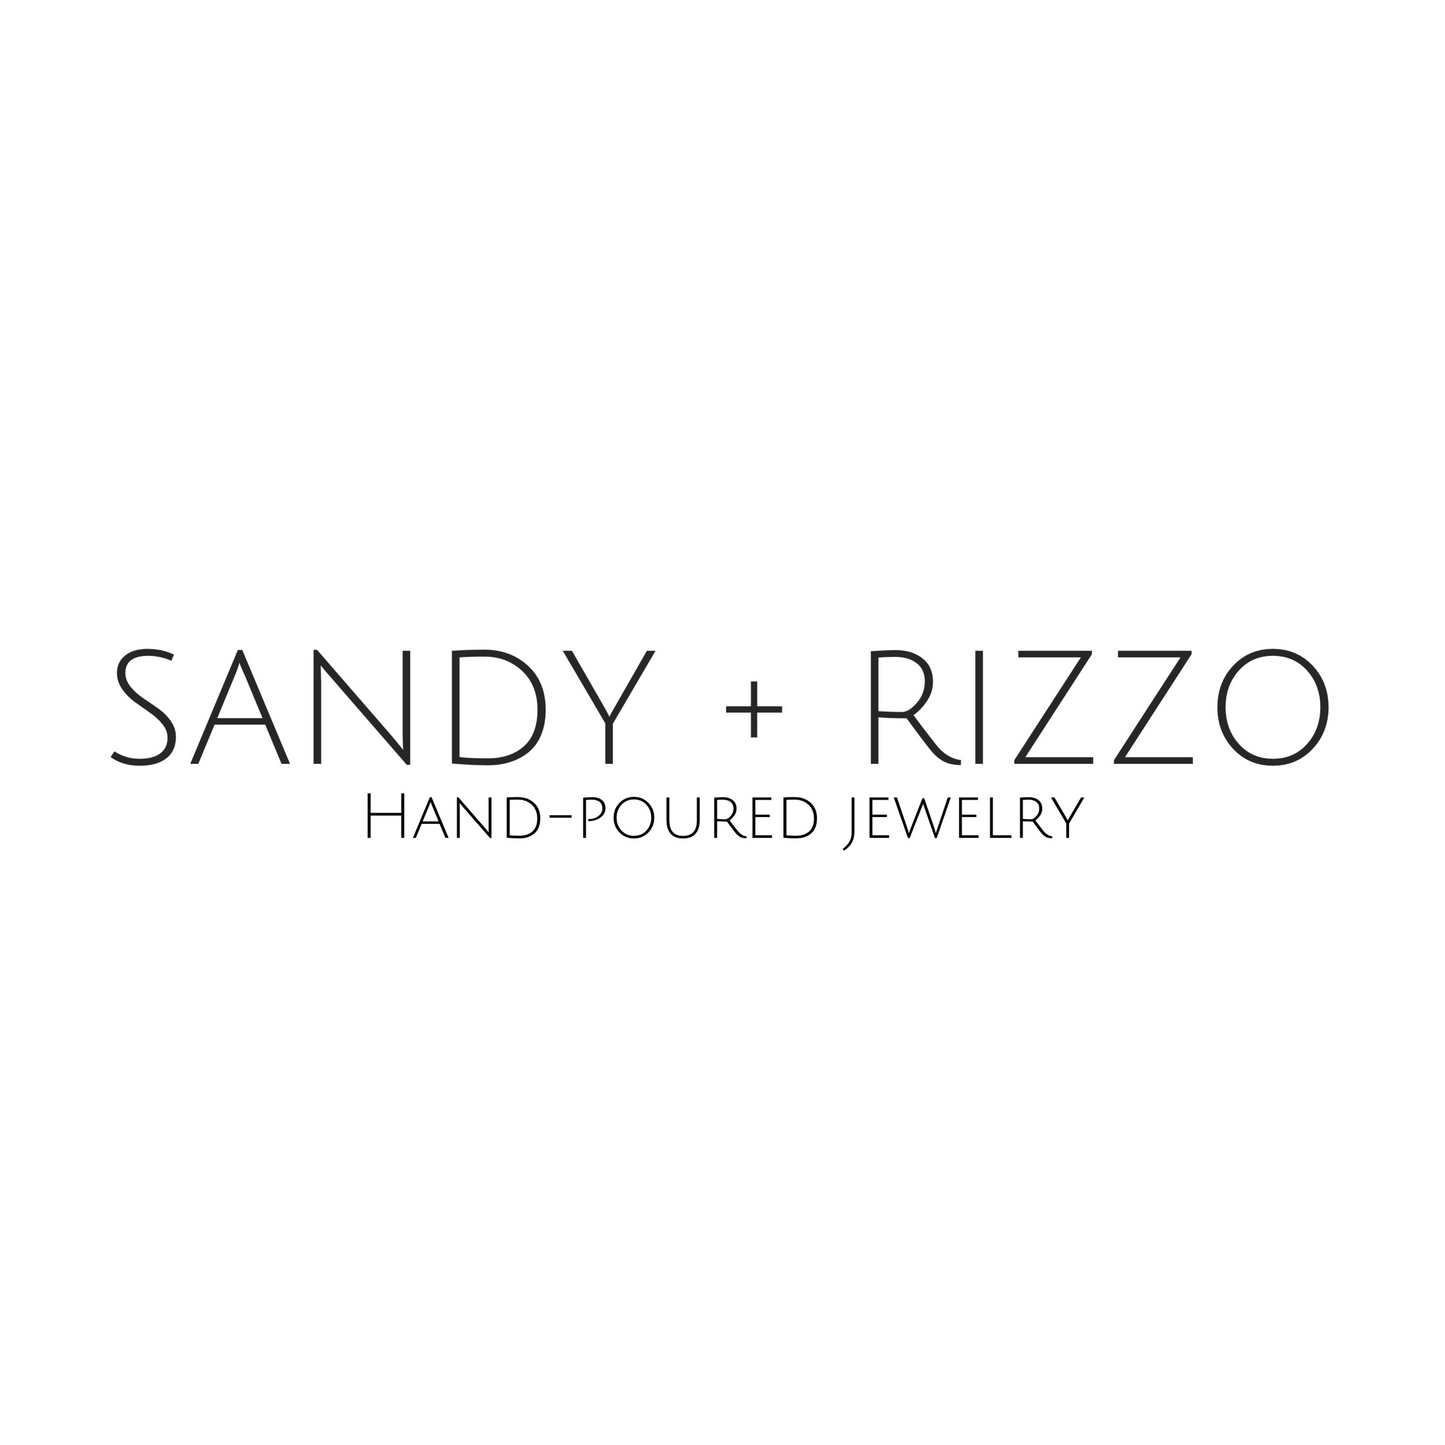 Sandy + Rizzo gift card